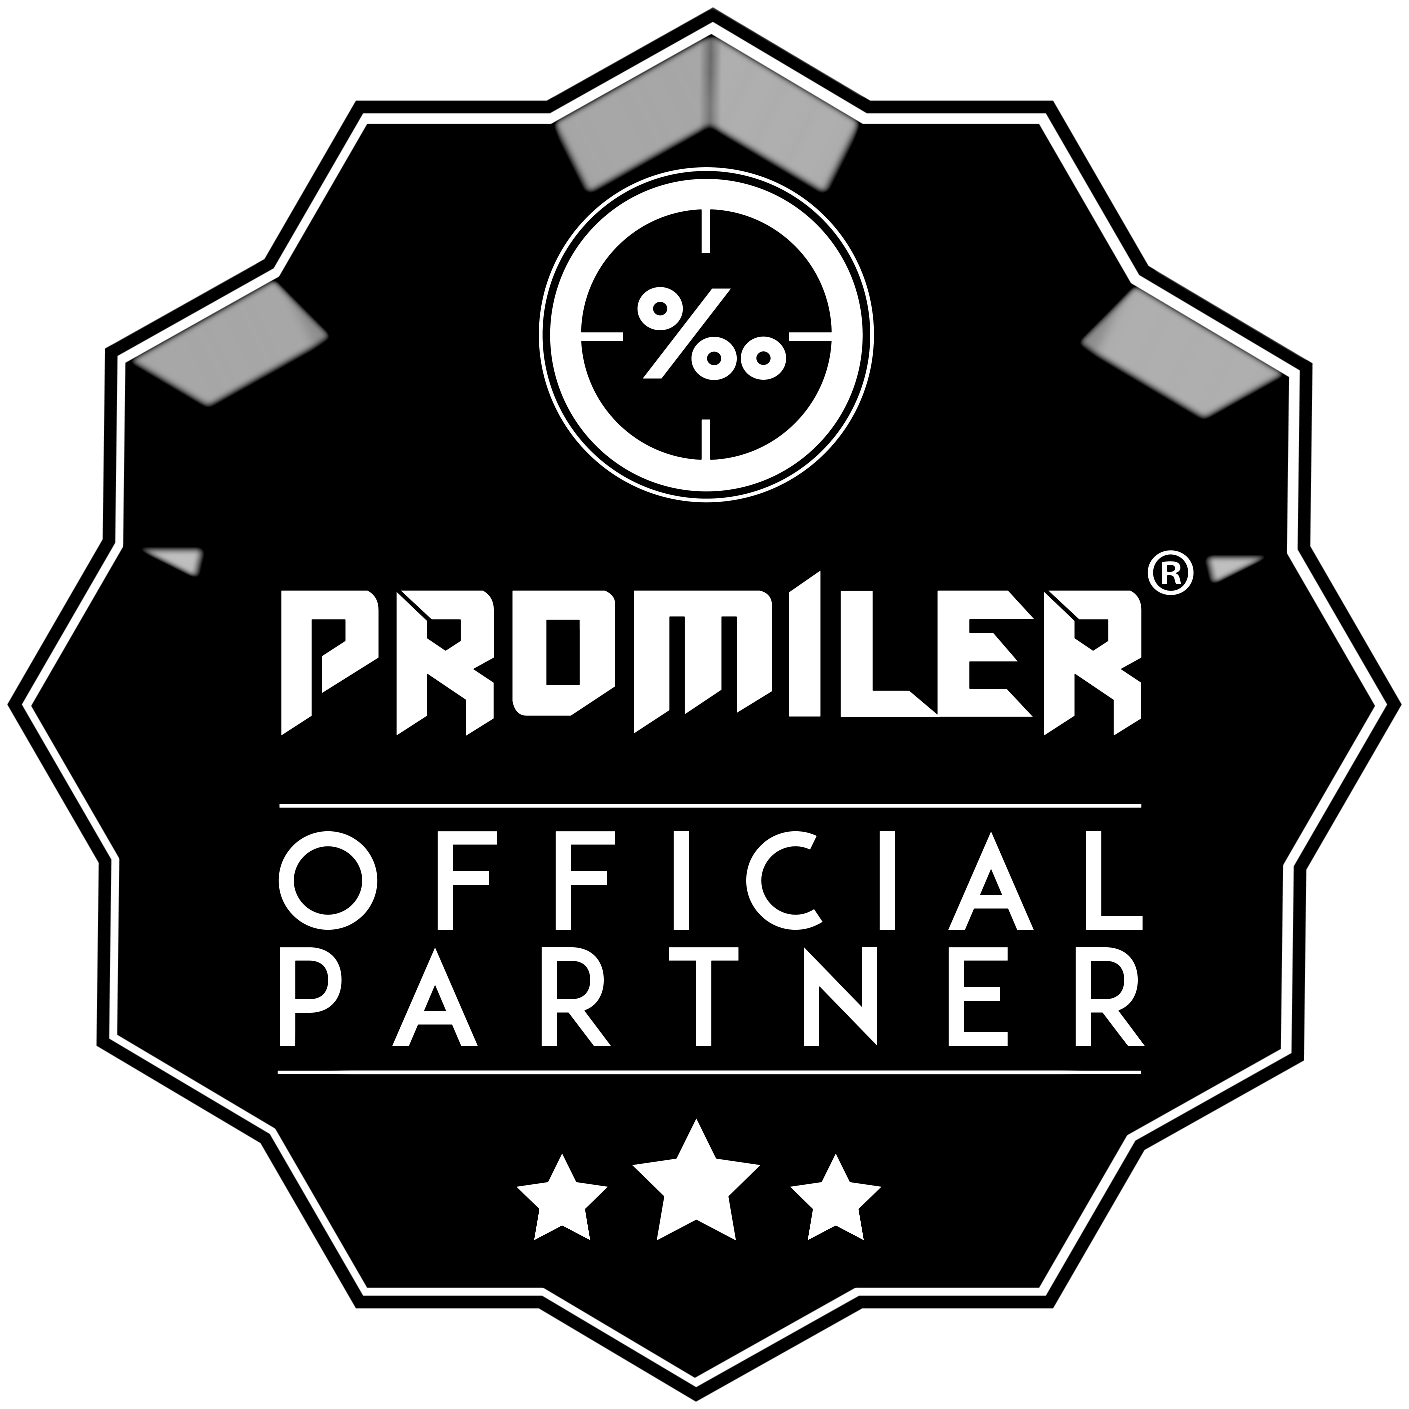 promiler official partner